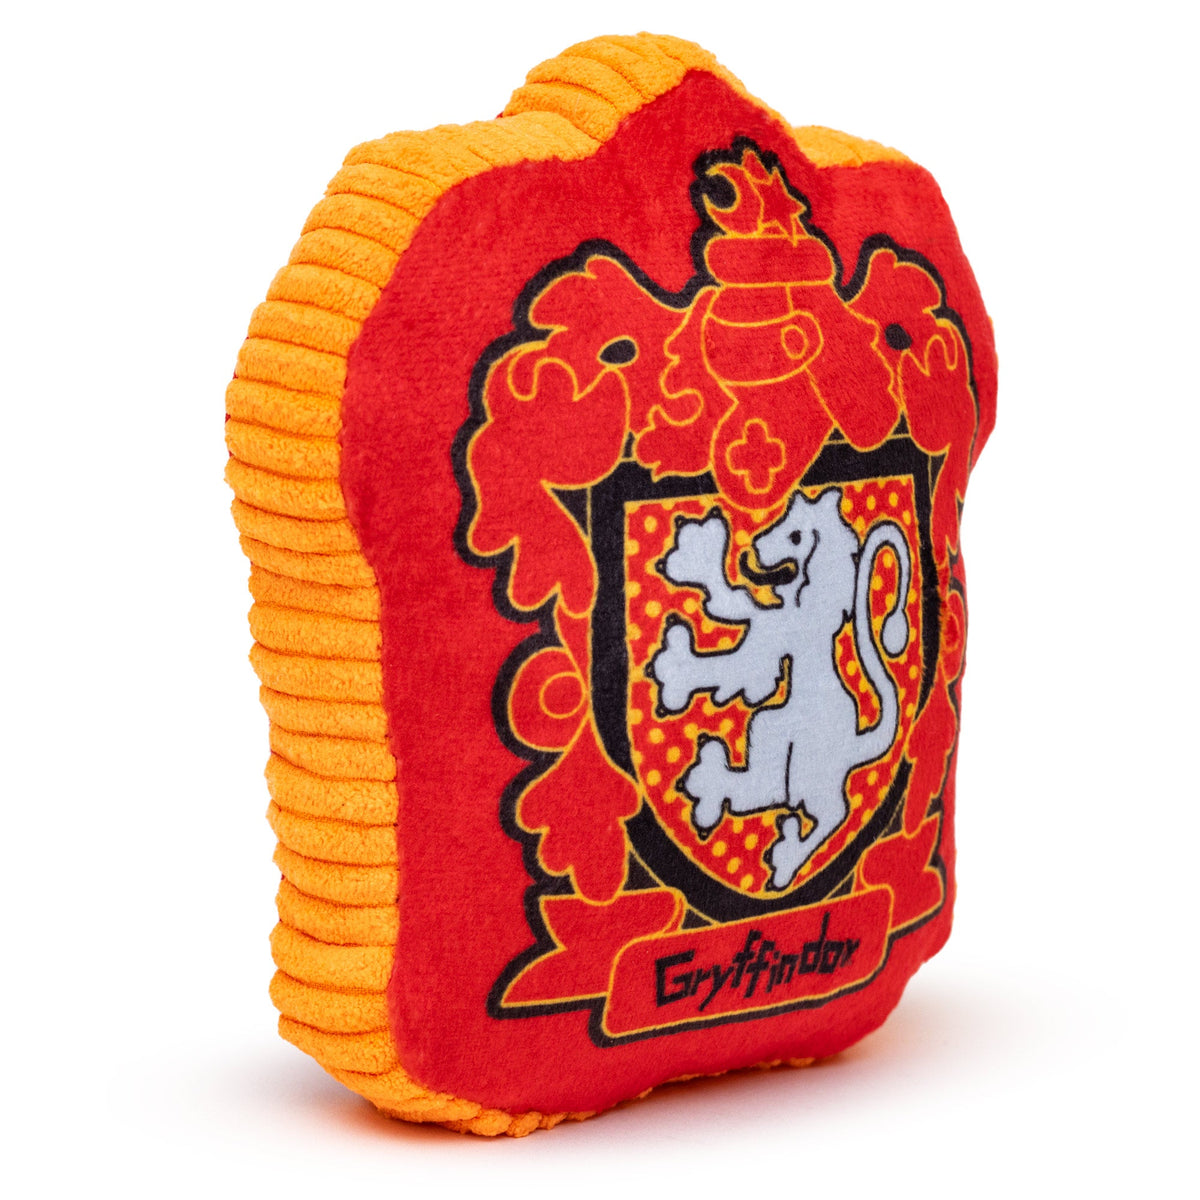 Dog Toy Squeaker Plush - Harry Potter Gryffindor Lion Charm Crest Red